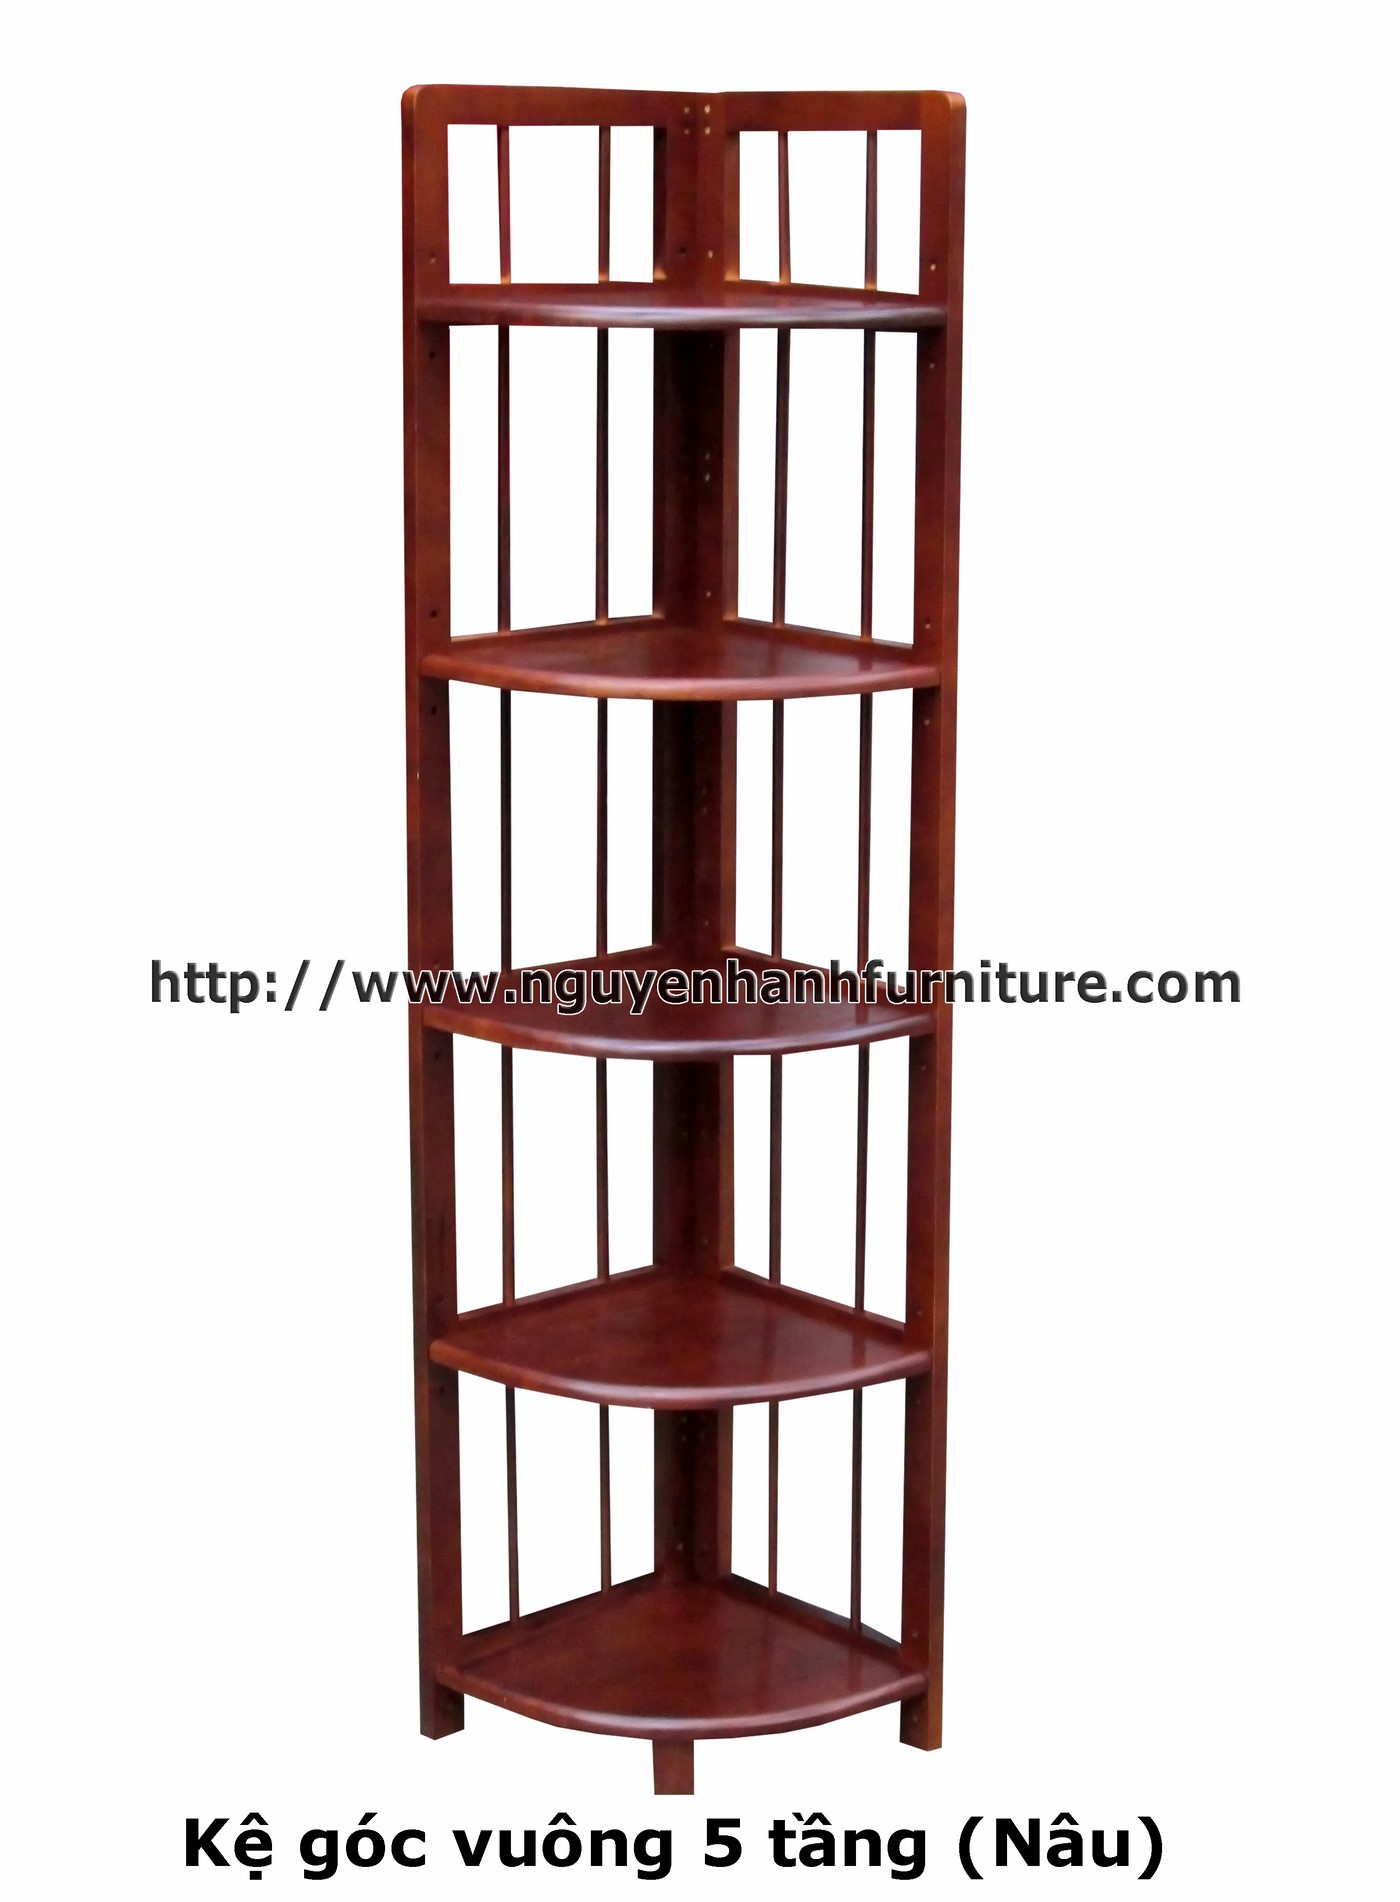 Name product: Square corner shelf 5 floors (Brown) - Dimensions: 36 x 36 x 157 (H) - Description: Wood natural rubber